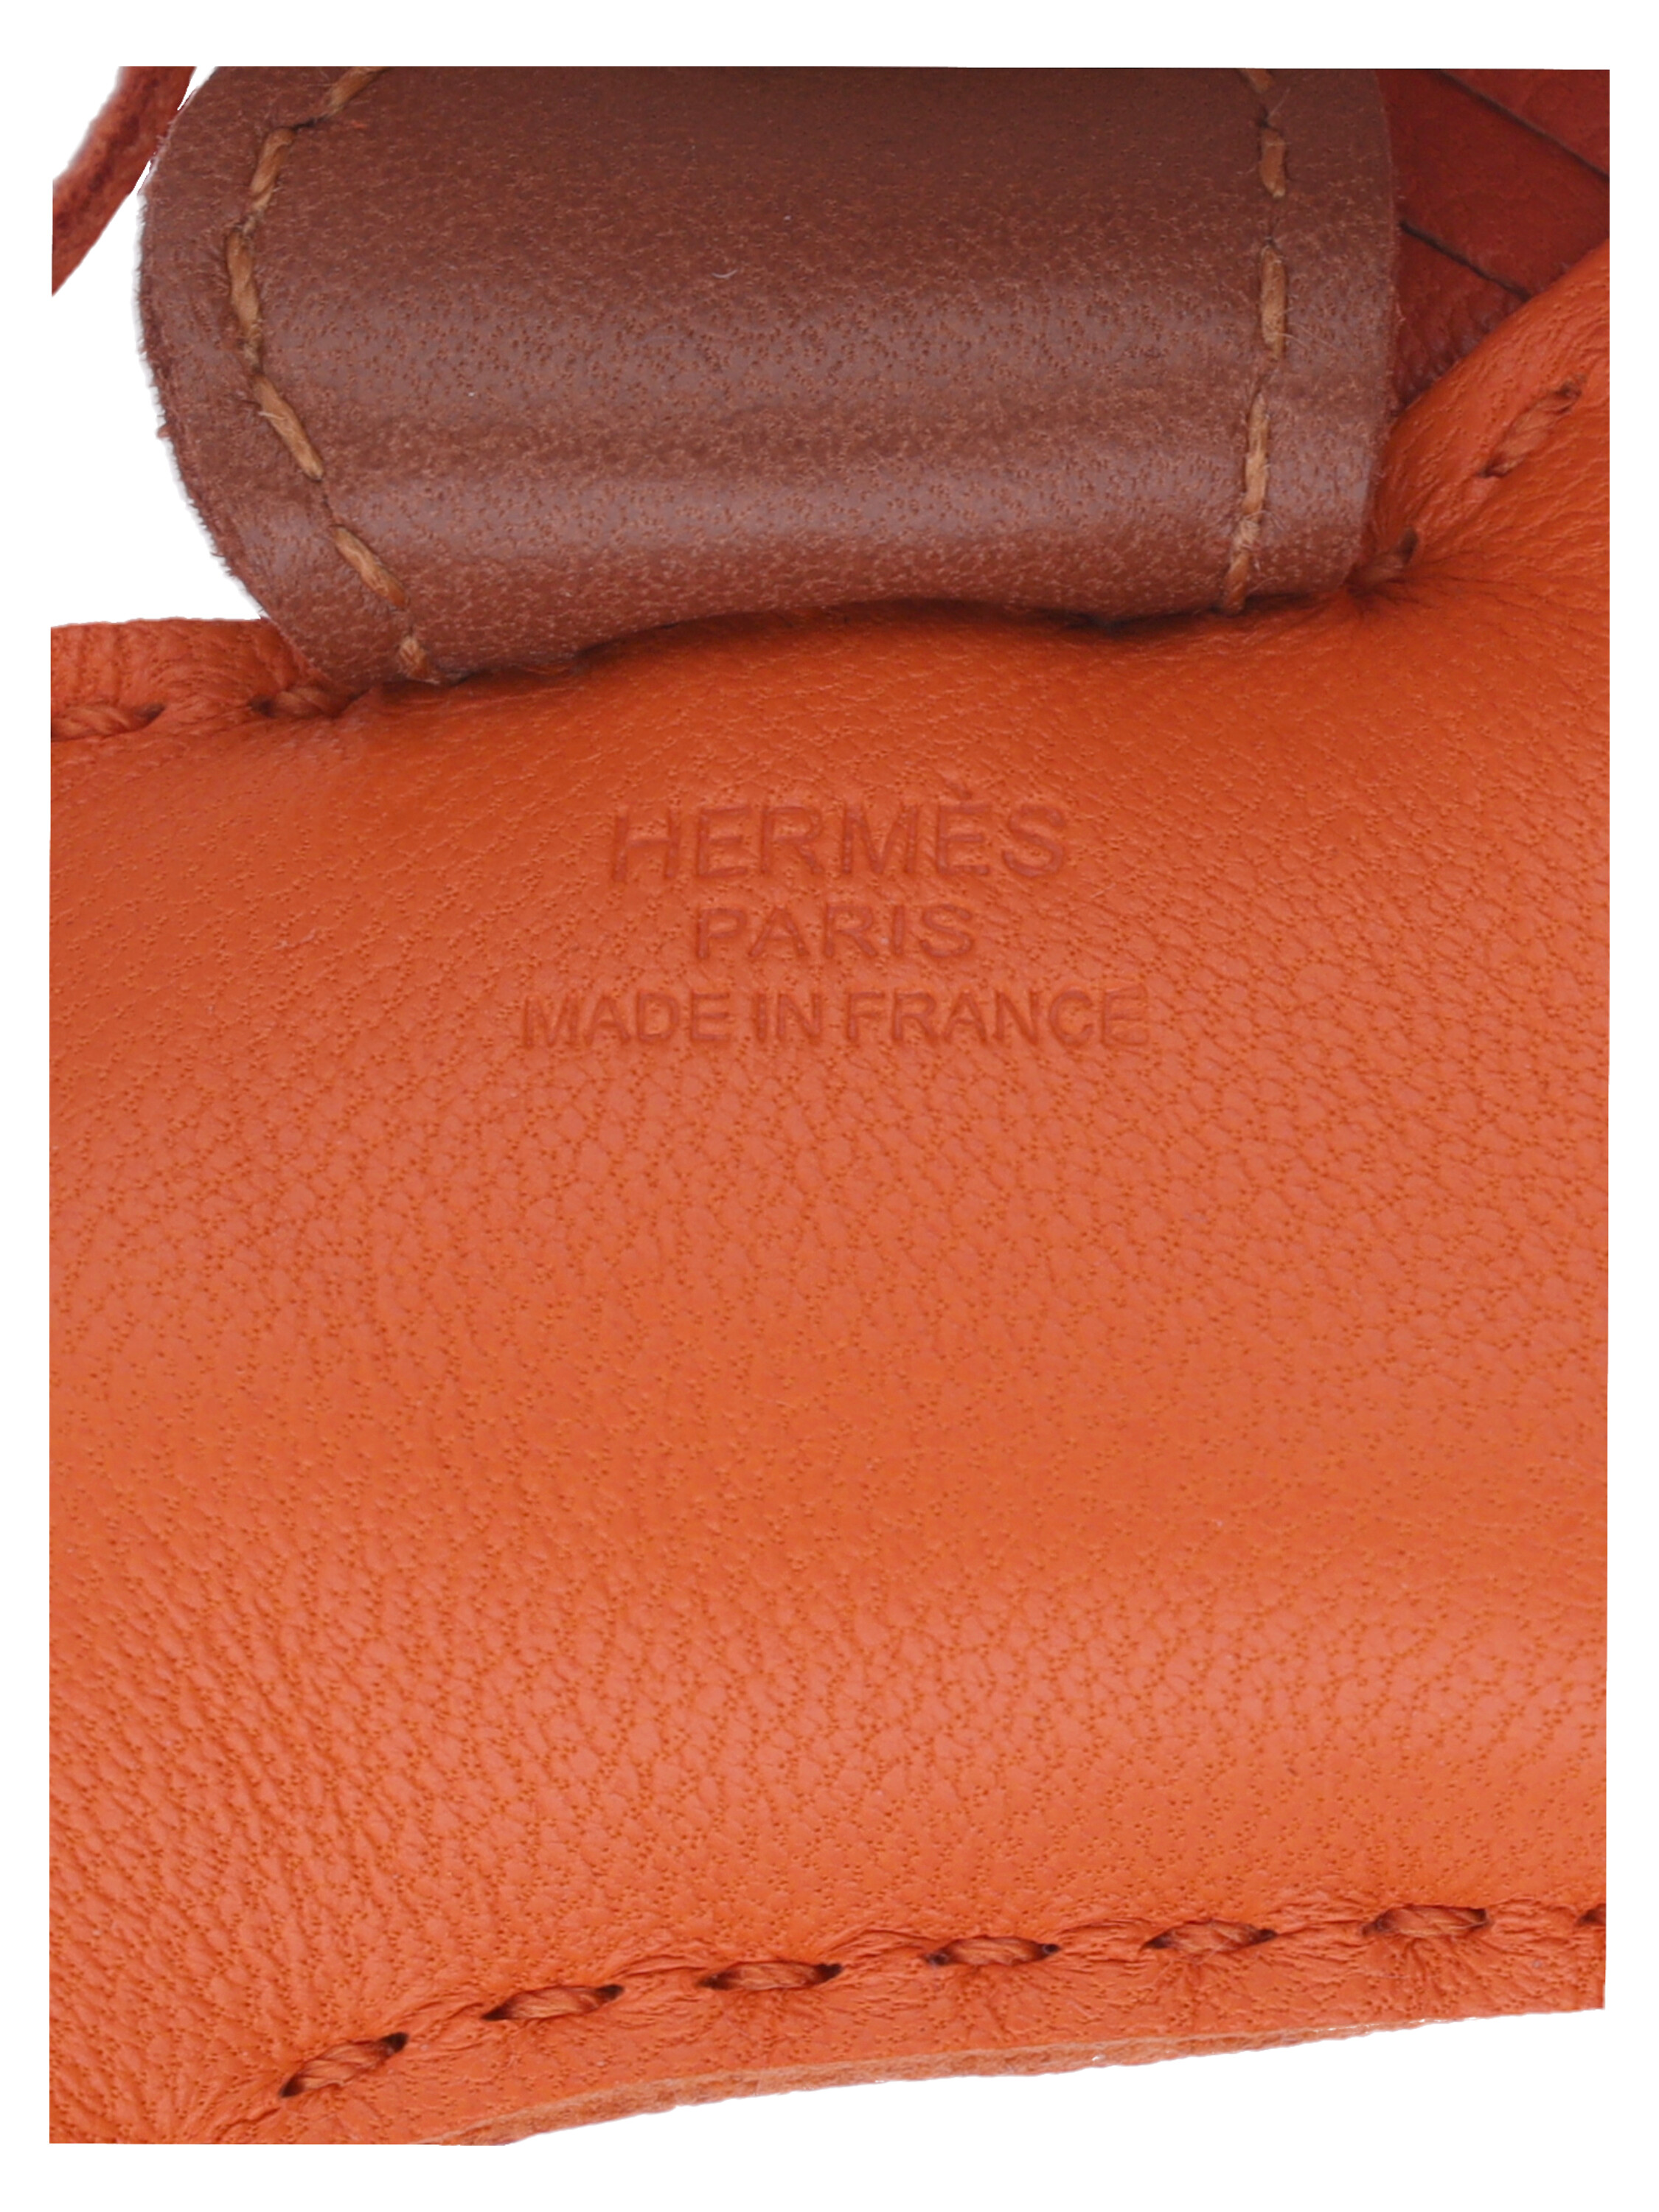 Hermes accessories. Tagged Hermes accessories - BERNARDINI Milano